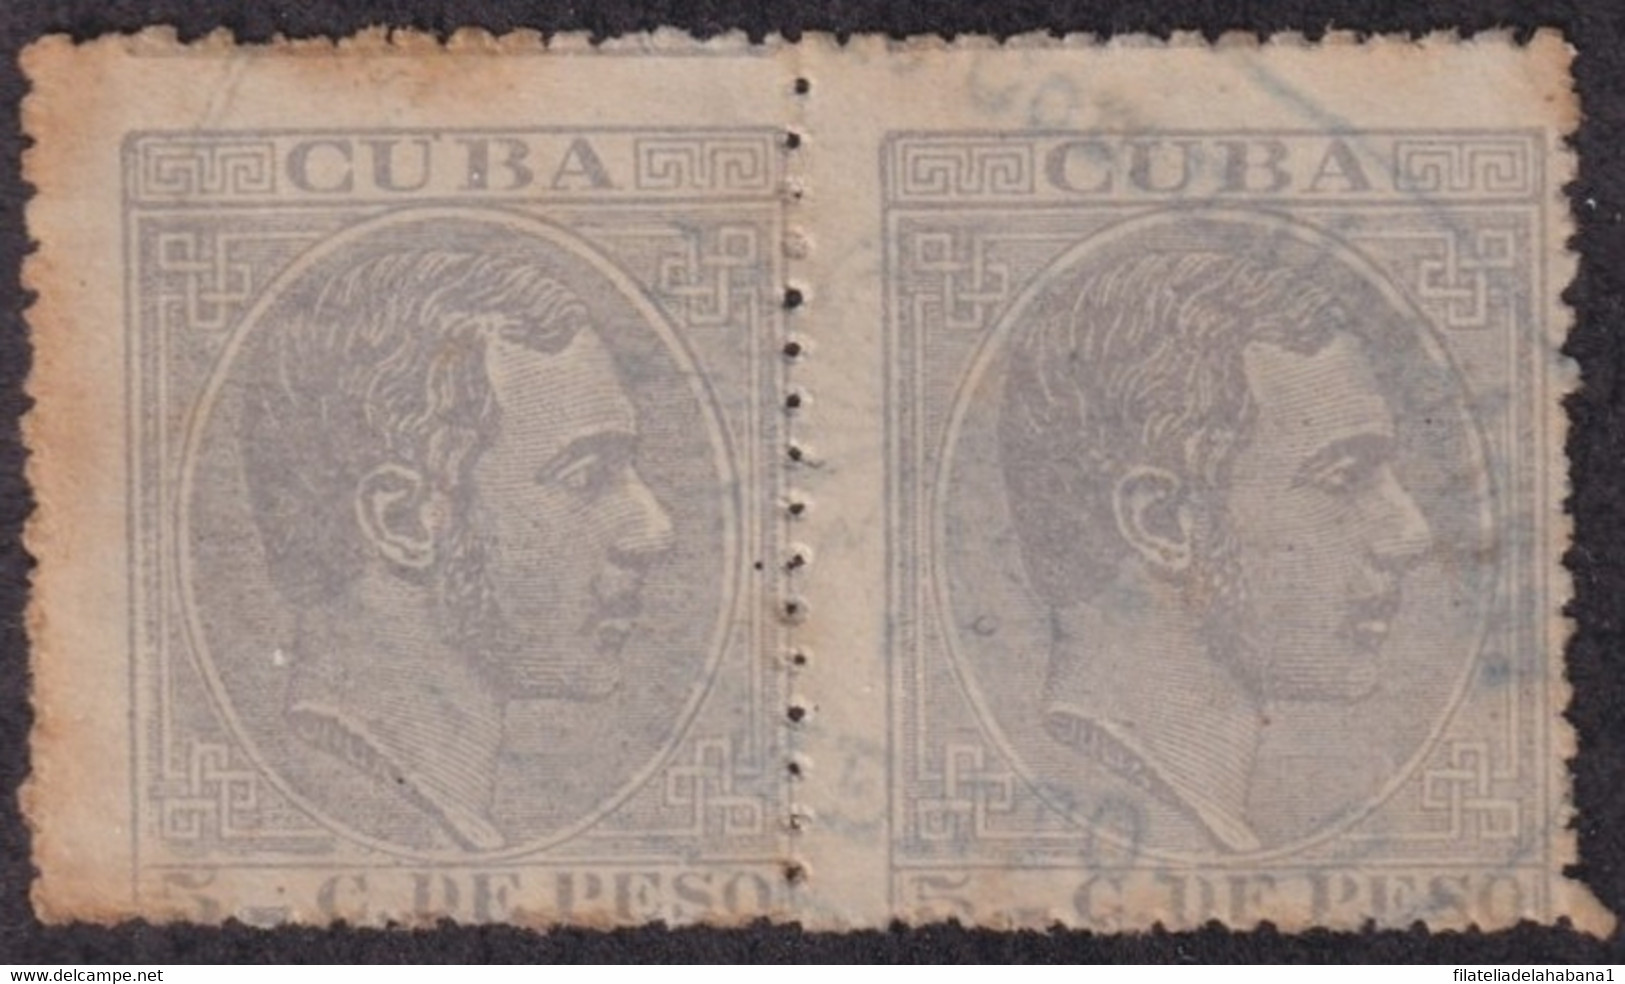 1884-307 CUBA ESPAÑA SPAIN ANTILLAS 1884 ALFONSO XII 5c TELEGRAPH CANCEL. - Voorfilatelie